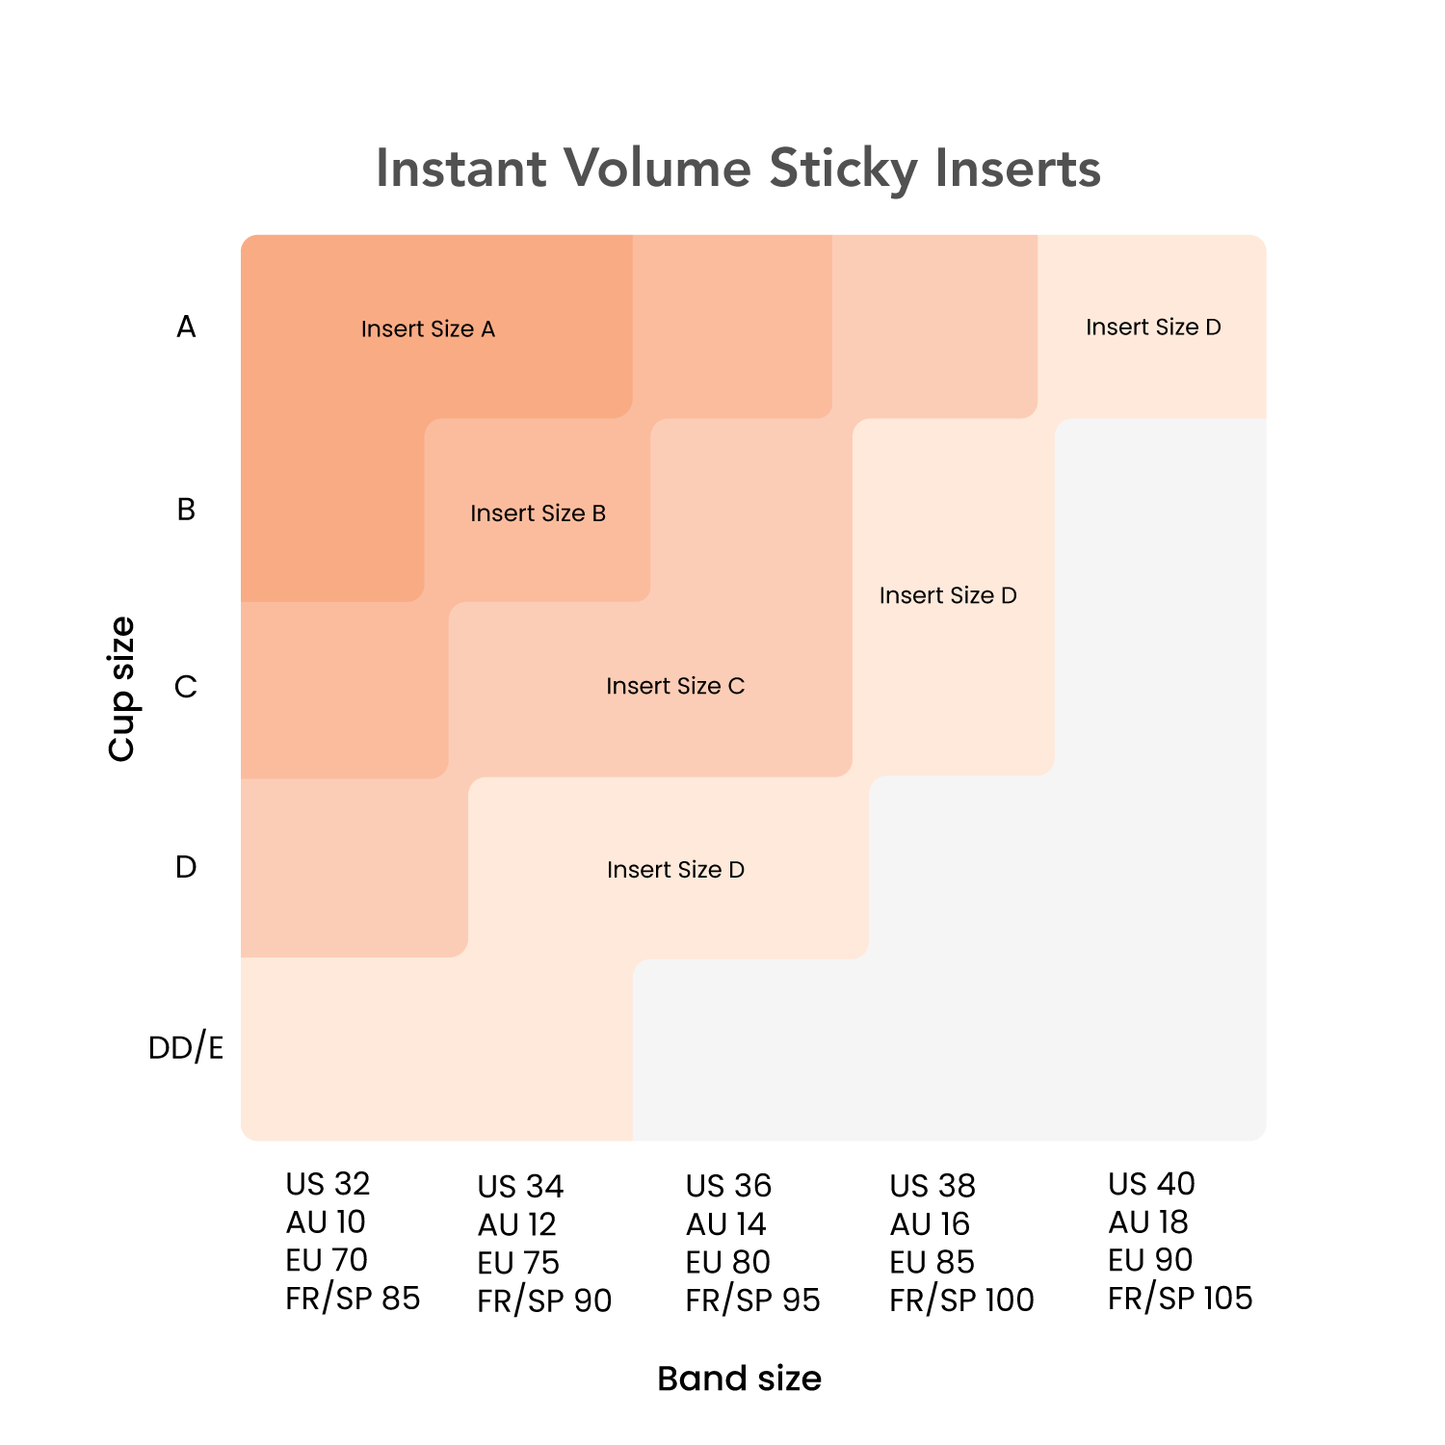 Instant Volume Sticky Inserts